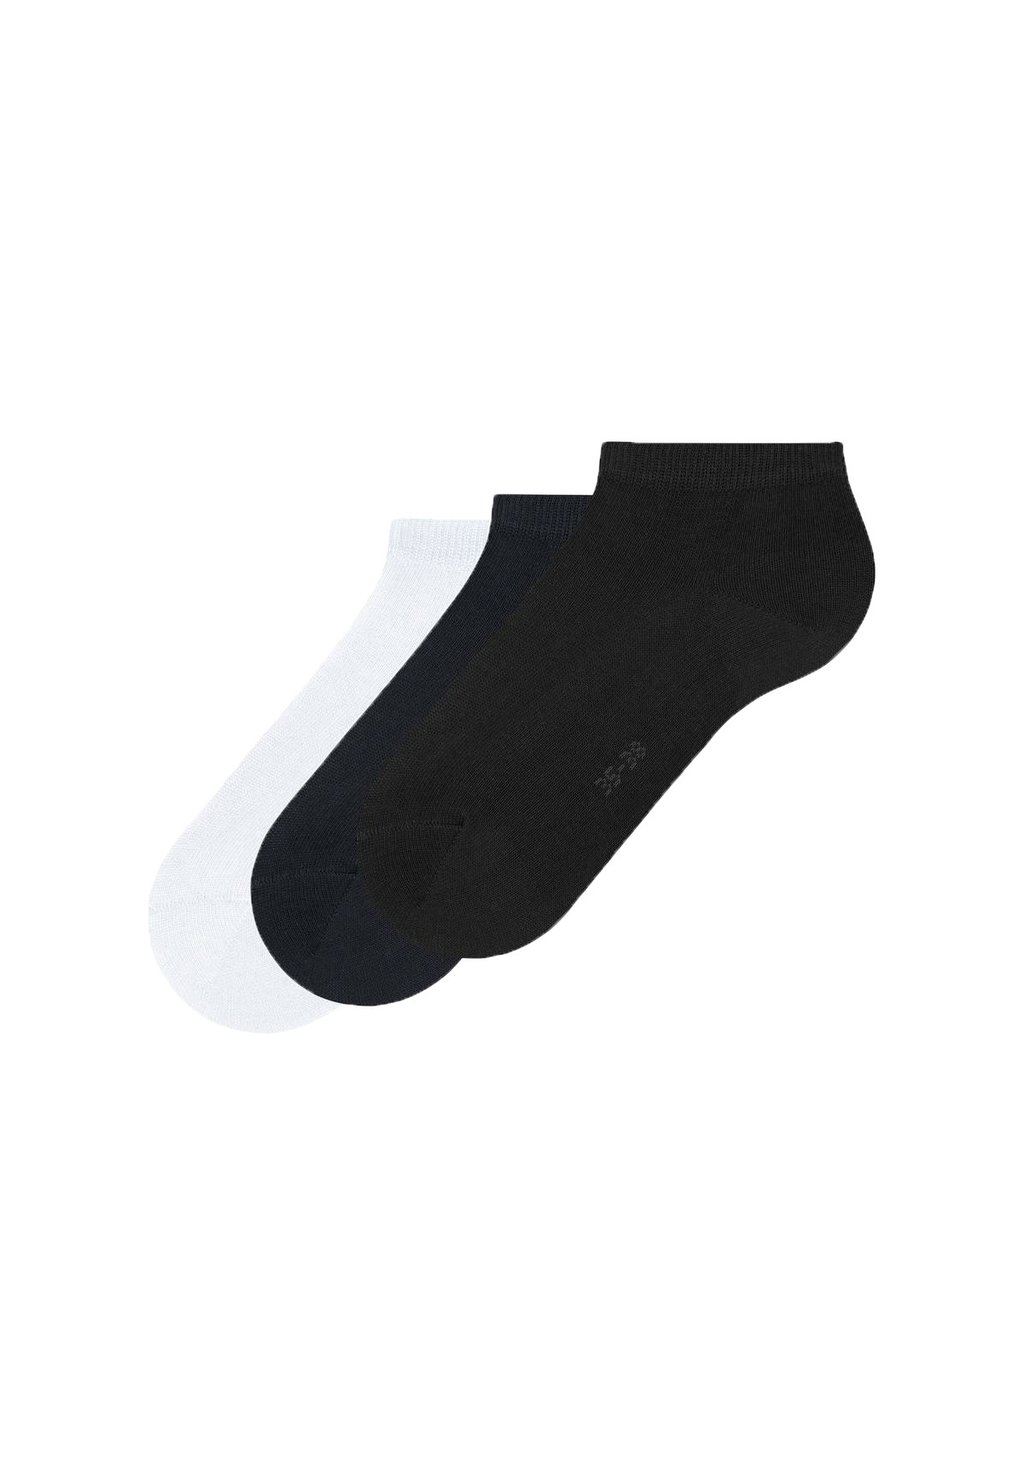 Носки FALKE men s funny happy socks punk pattern printed socks animal tube geometric fashion casual large size black socks high elasticity